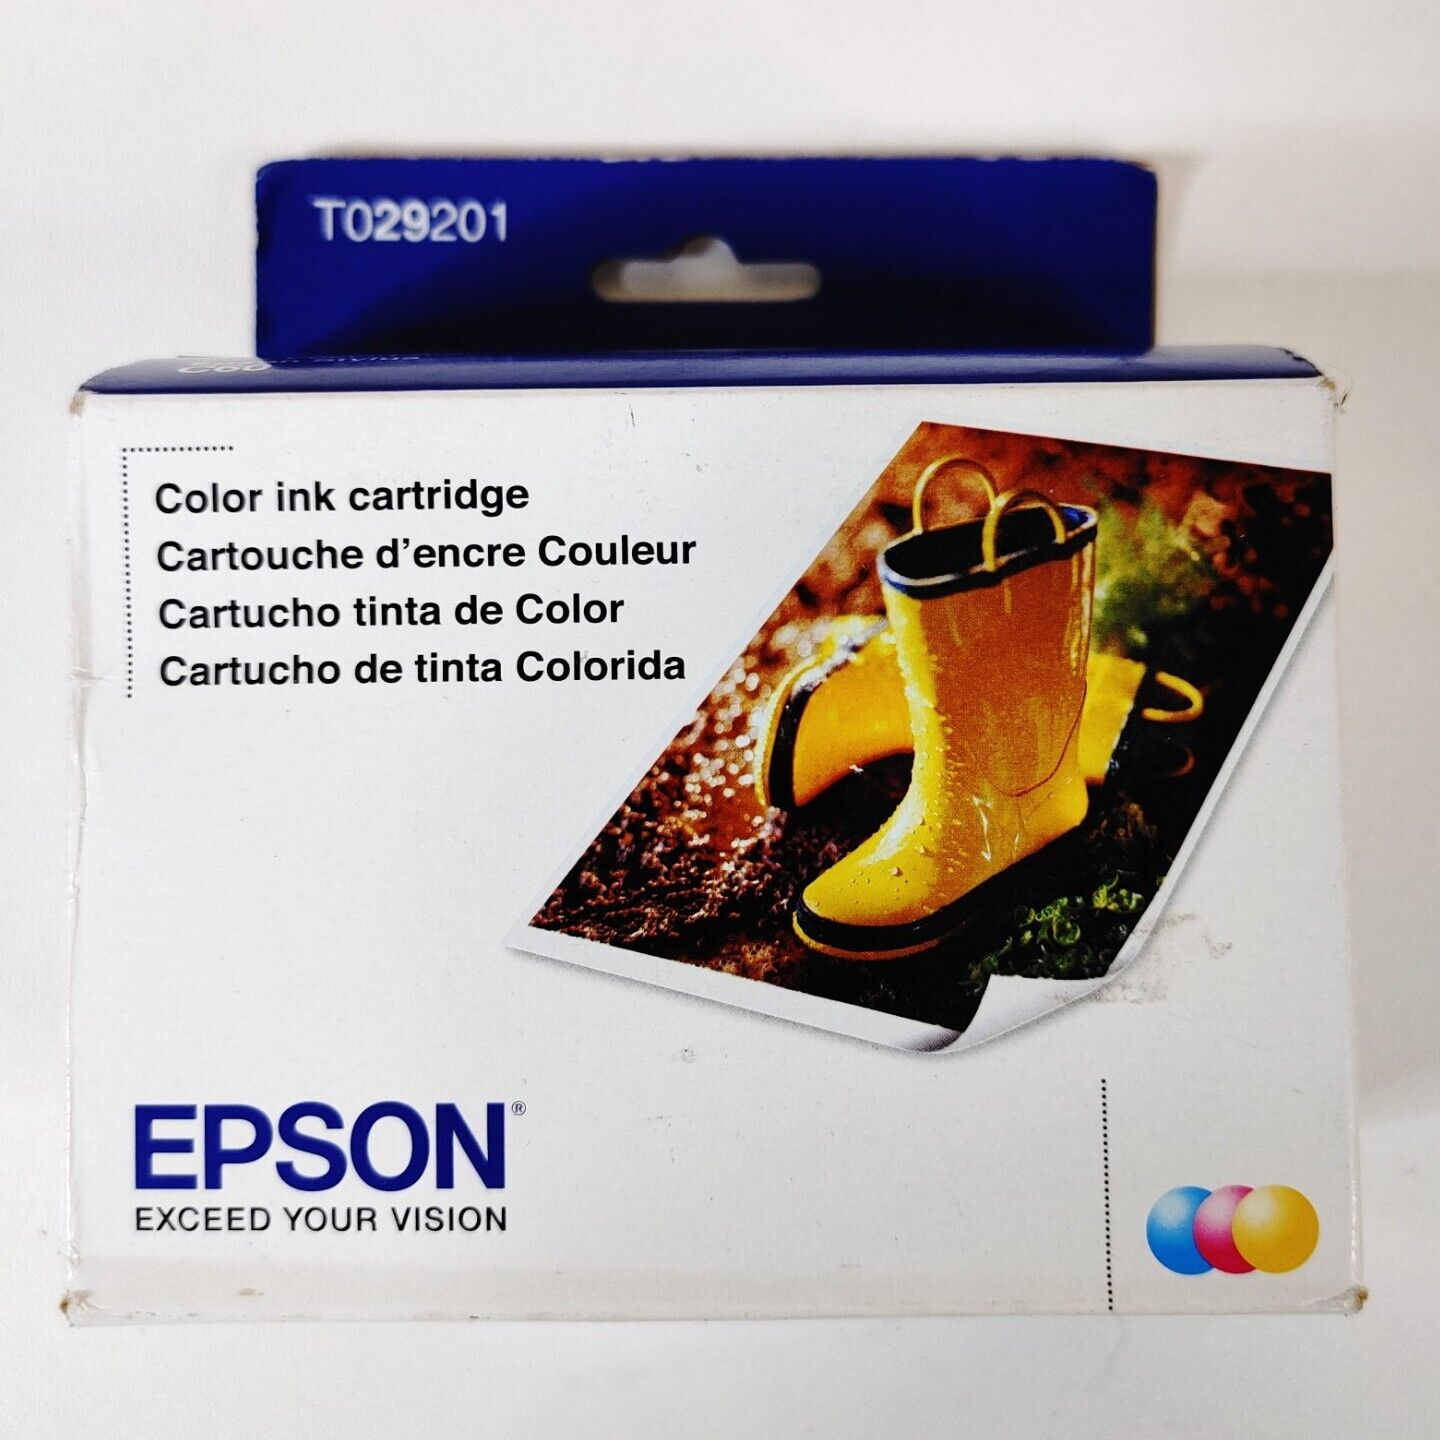 Genuine Epson T029 201 Color Cartridge for Epson Stylus C60 EXP: 2016 NOS Sealed